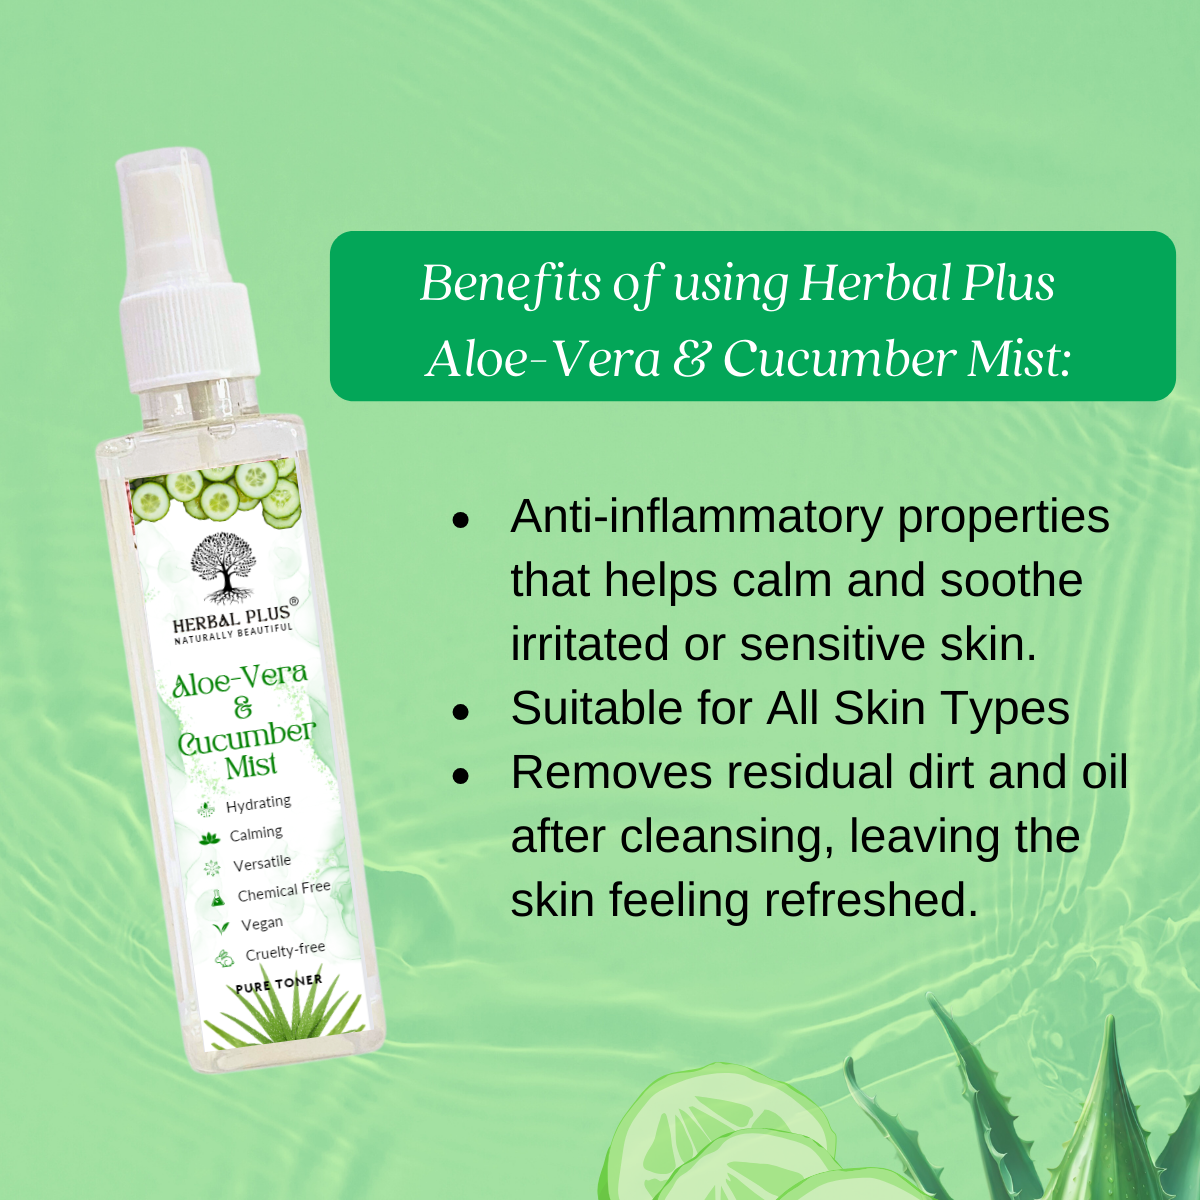 Herbal Plus Aloe-Vera and Cucumber Mist